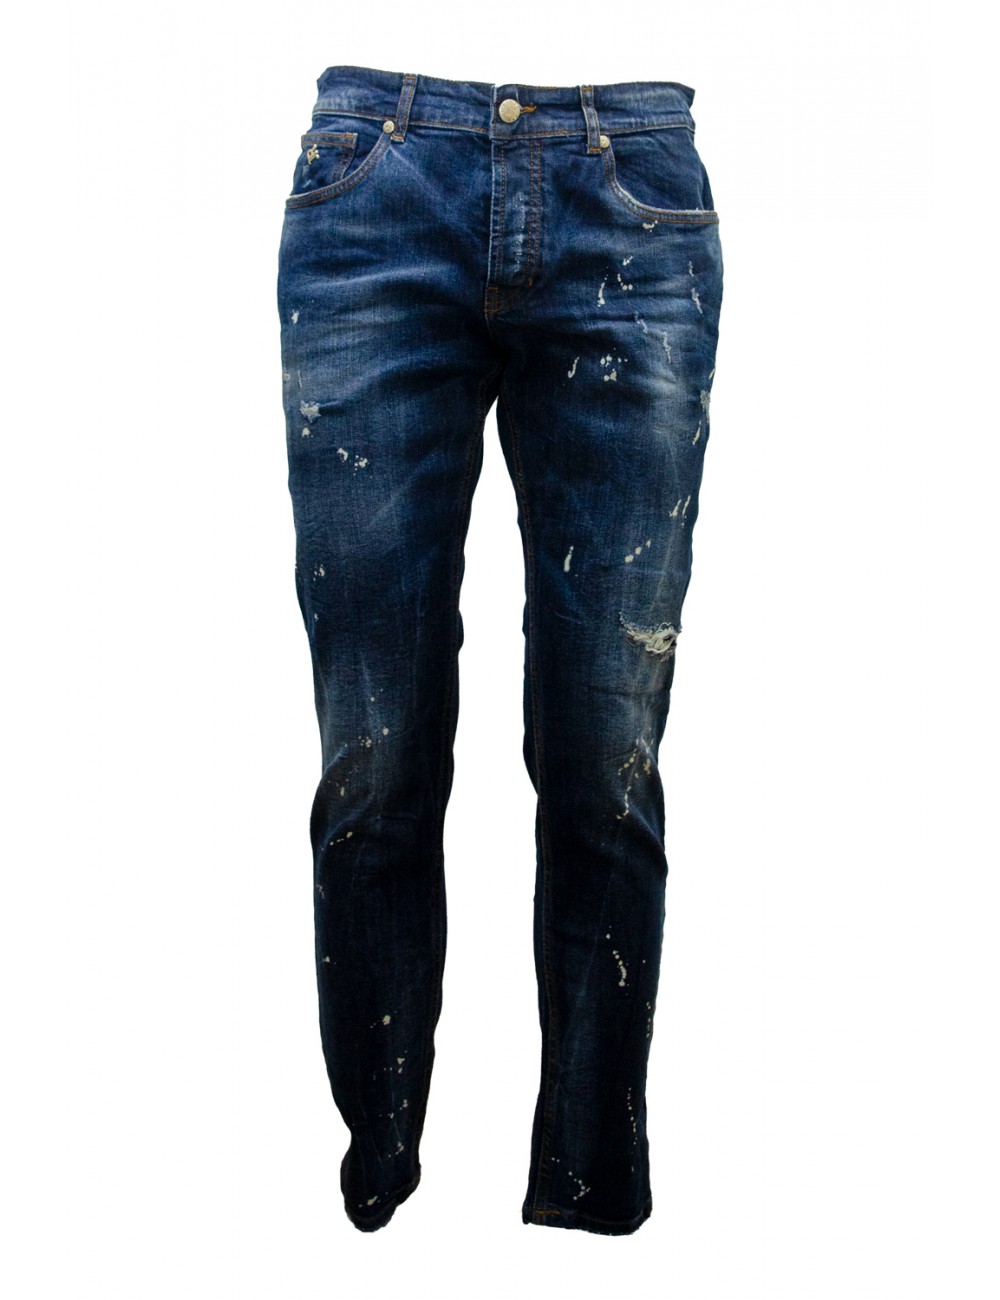 jeans john richmond UOMO D.BLUE DK - RMA23042JE PG vista frontale